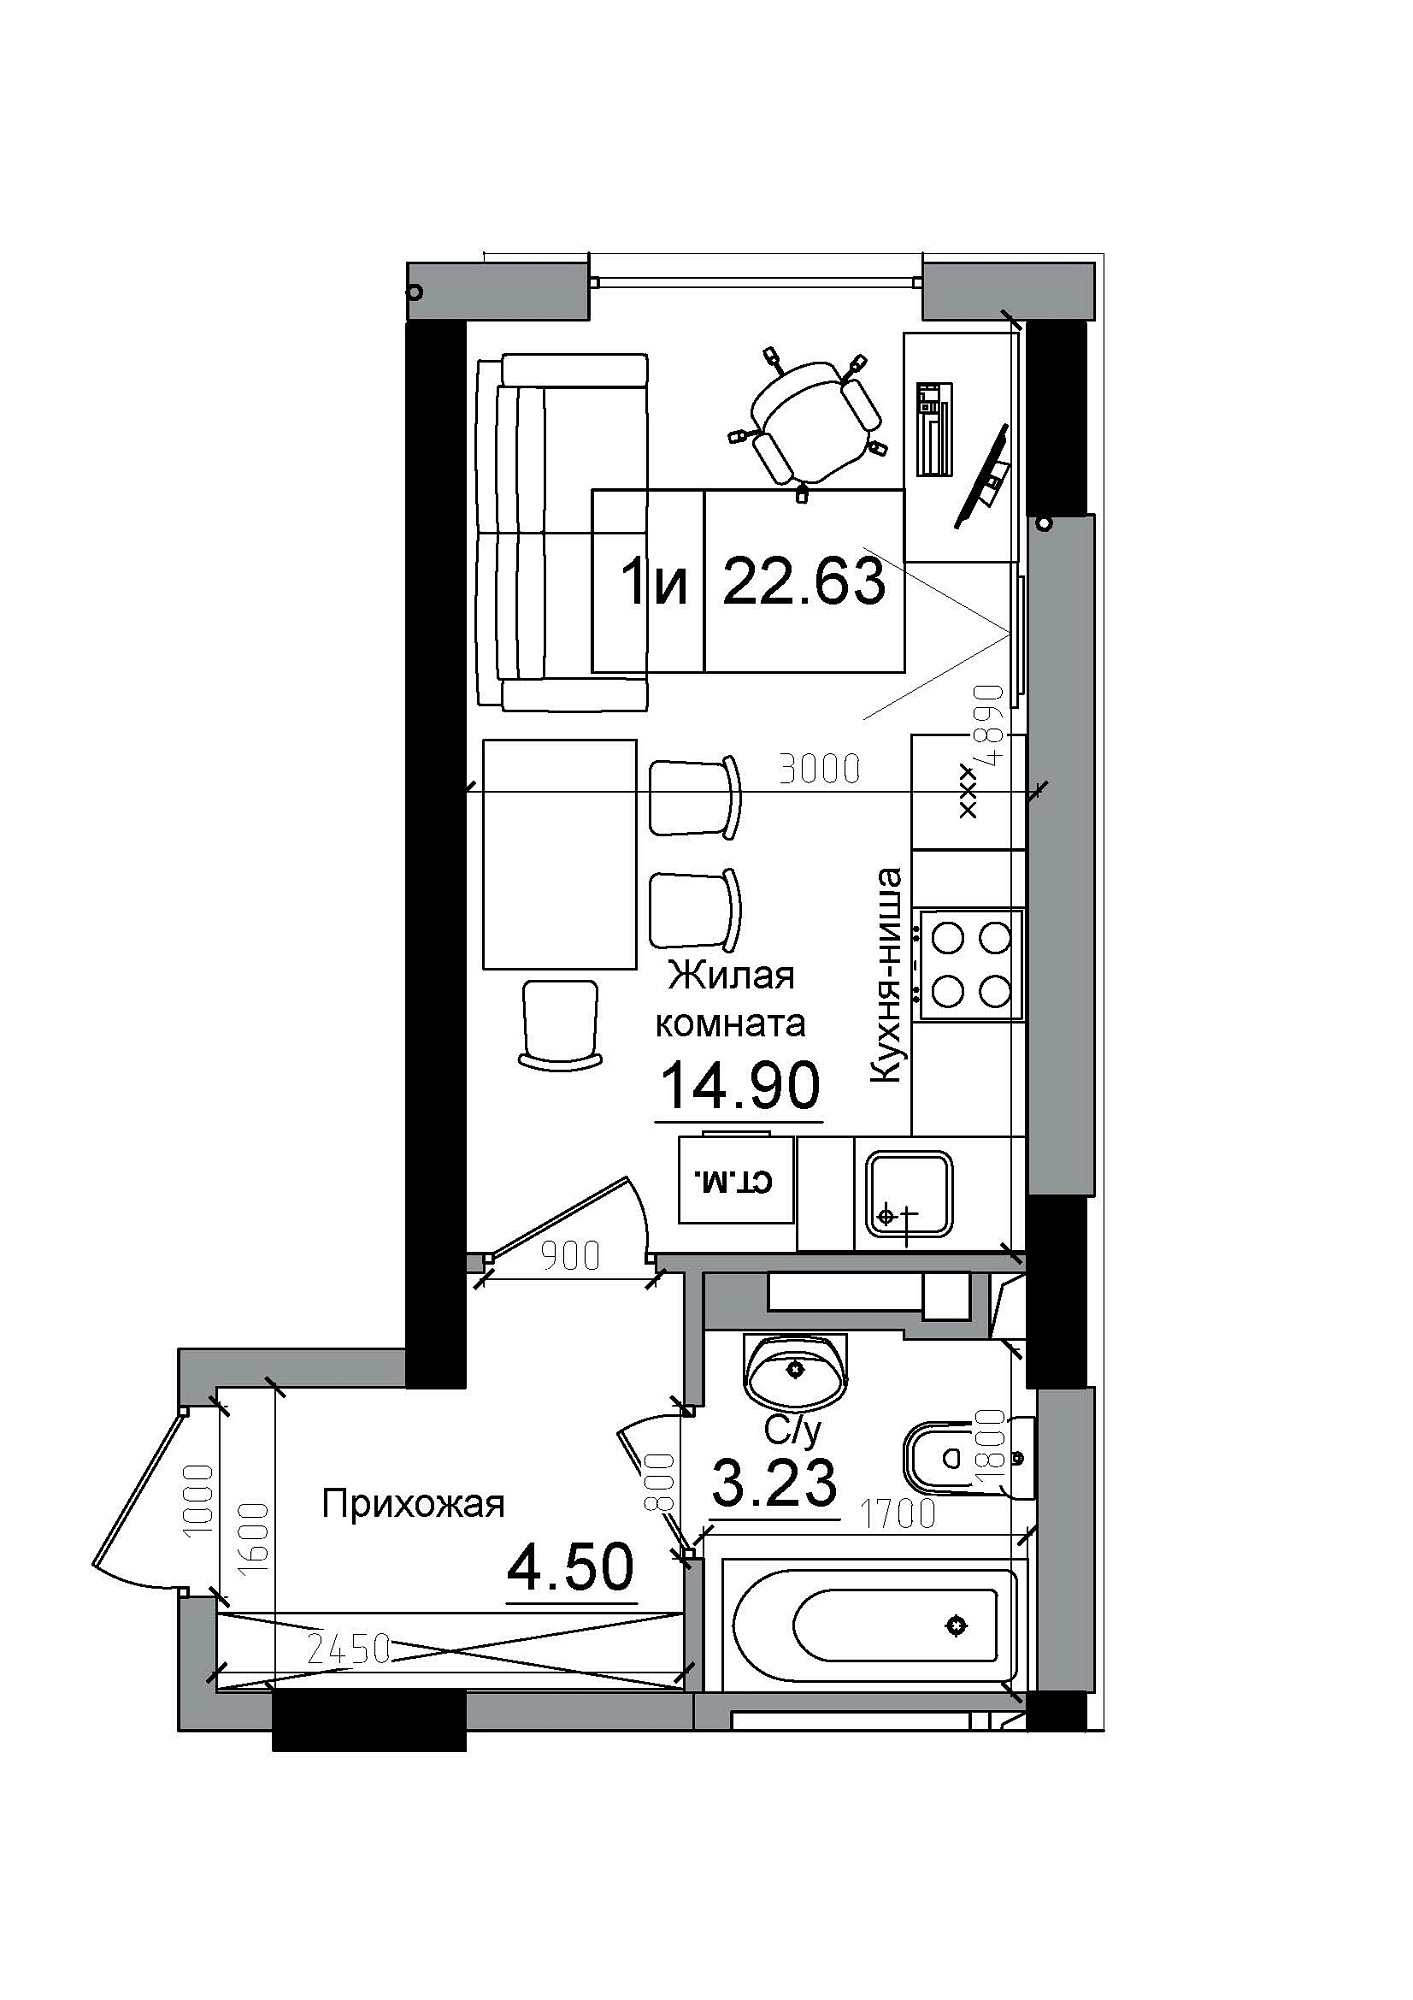 Planning Smart flats area 22.63m2, AB-12-06/00011.